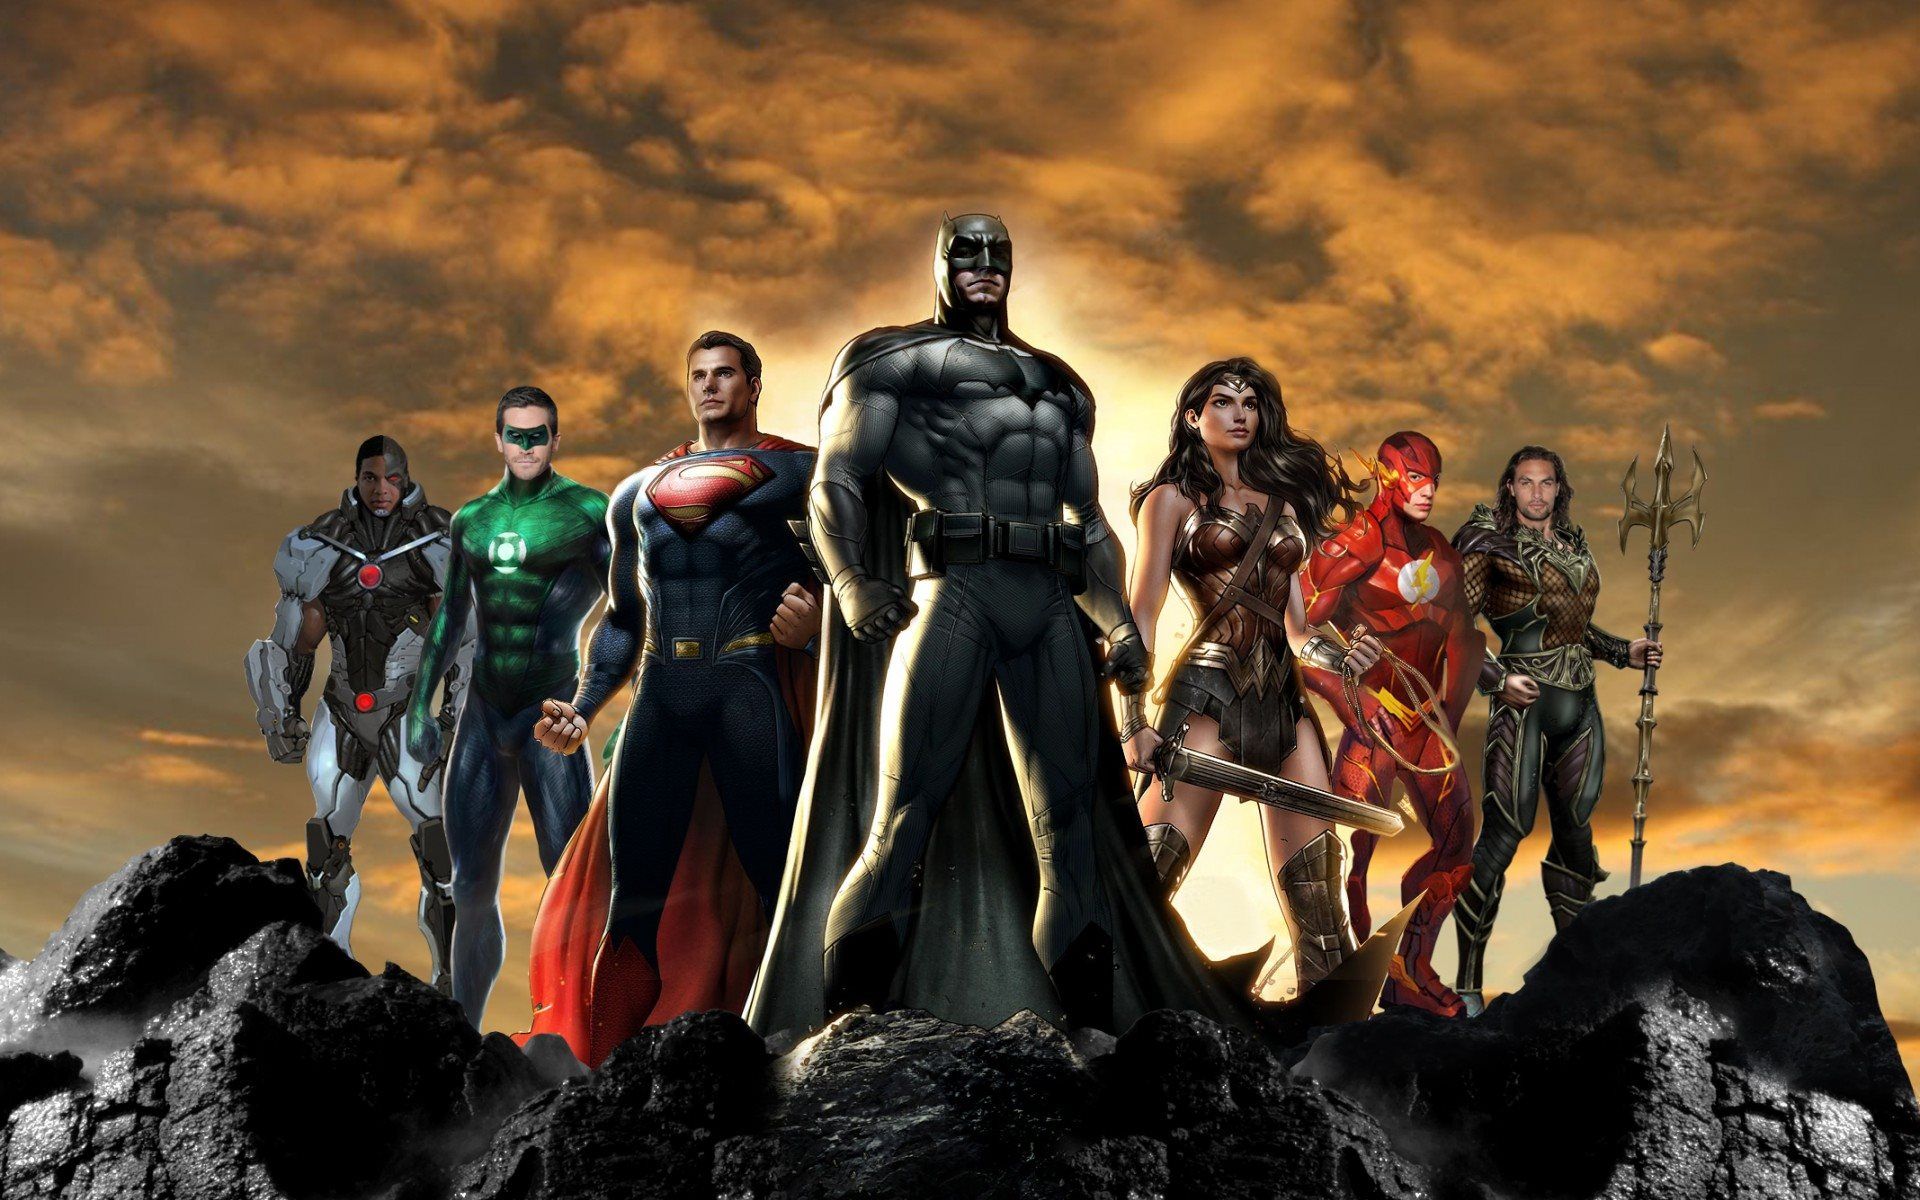 Download wallpaper Justice League, Superman, Batman, Wonder woman, Cyborg, Flash, Green lantern, Aquaman for desktop with resolution 1920x1200. High Quality HD picture wallpaper